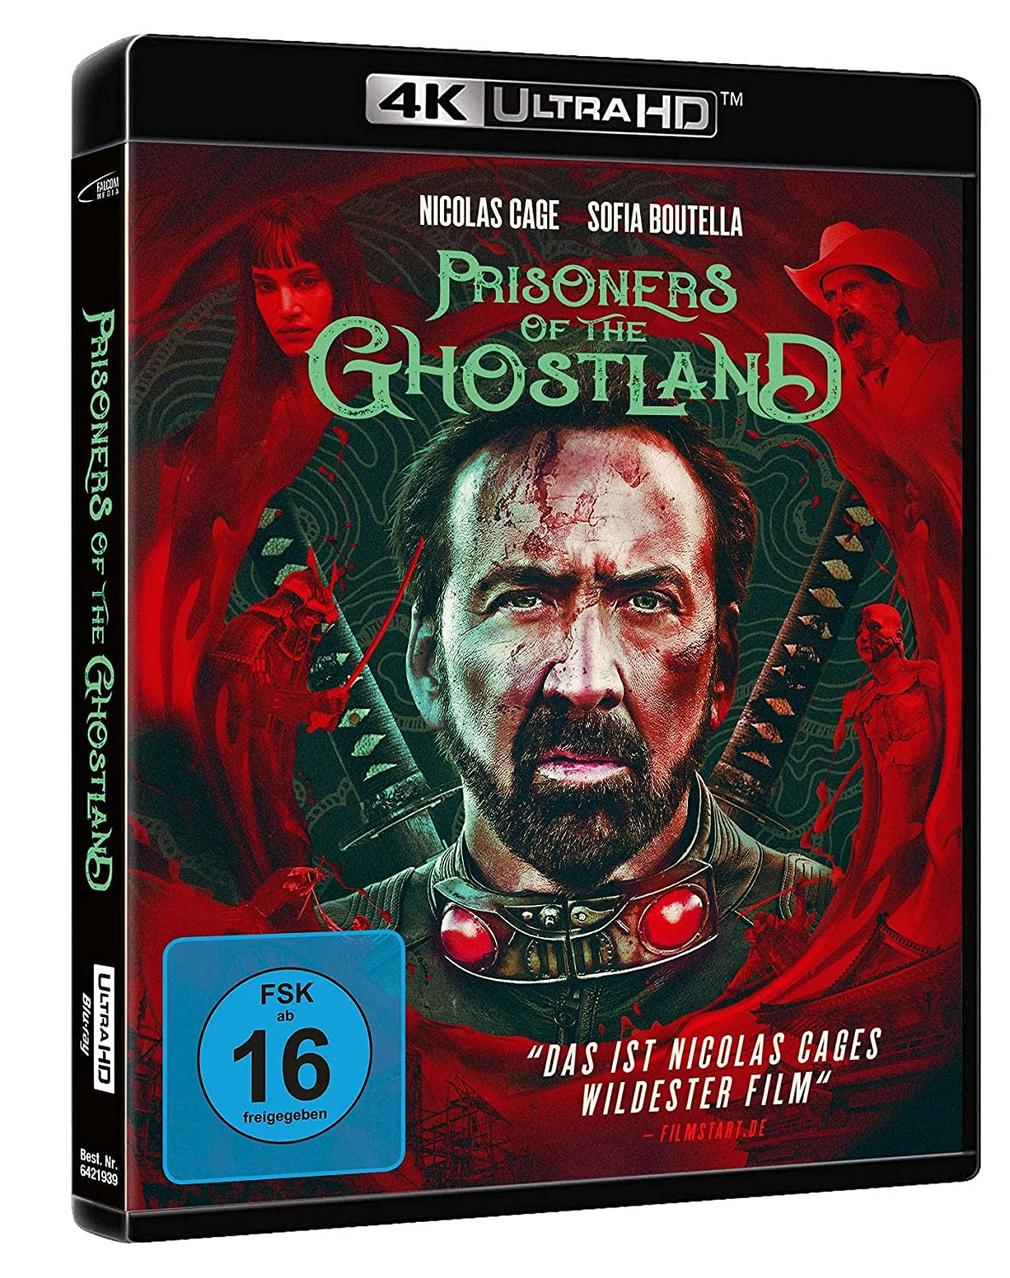 HD Prisoners 4K Ghostland the of Ultra Blu-ray